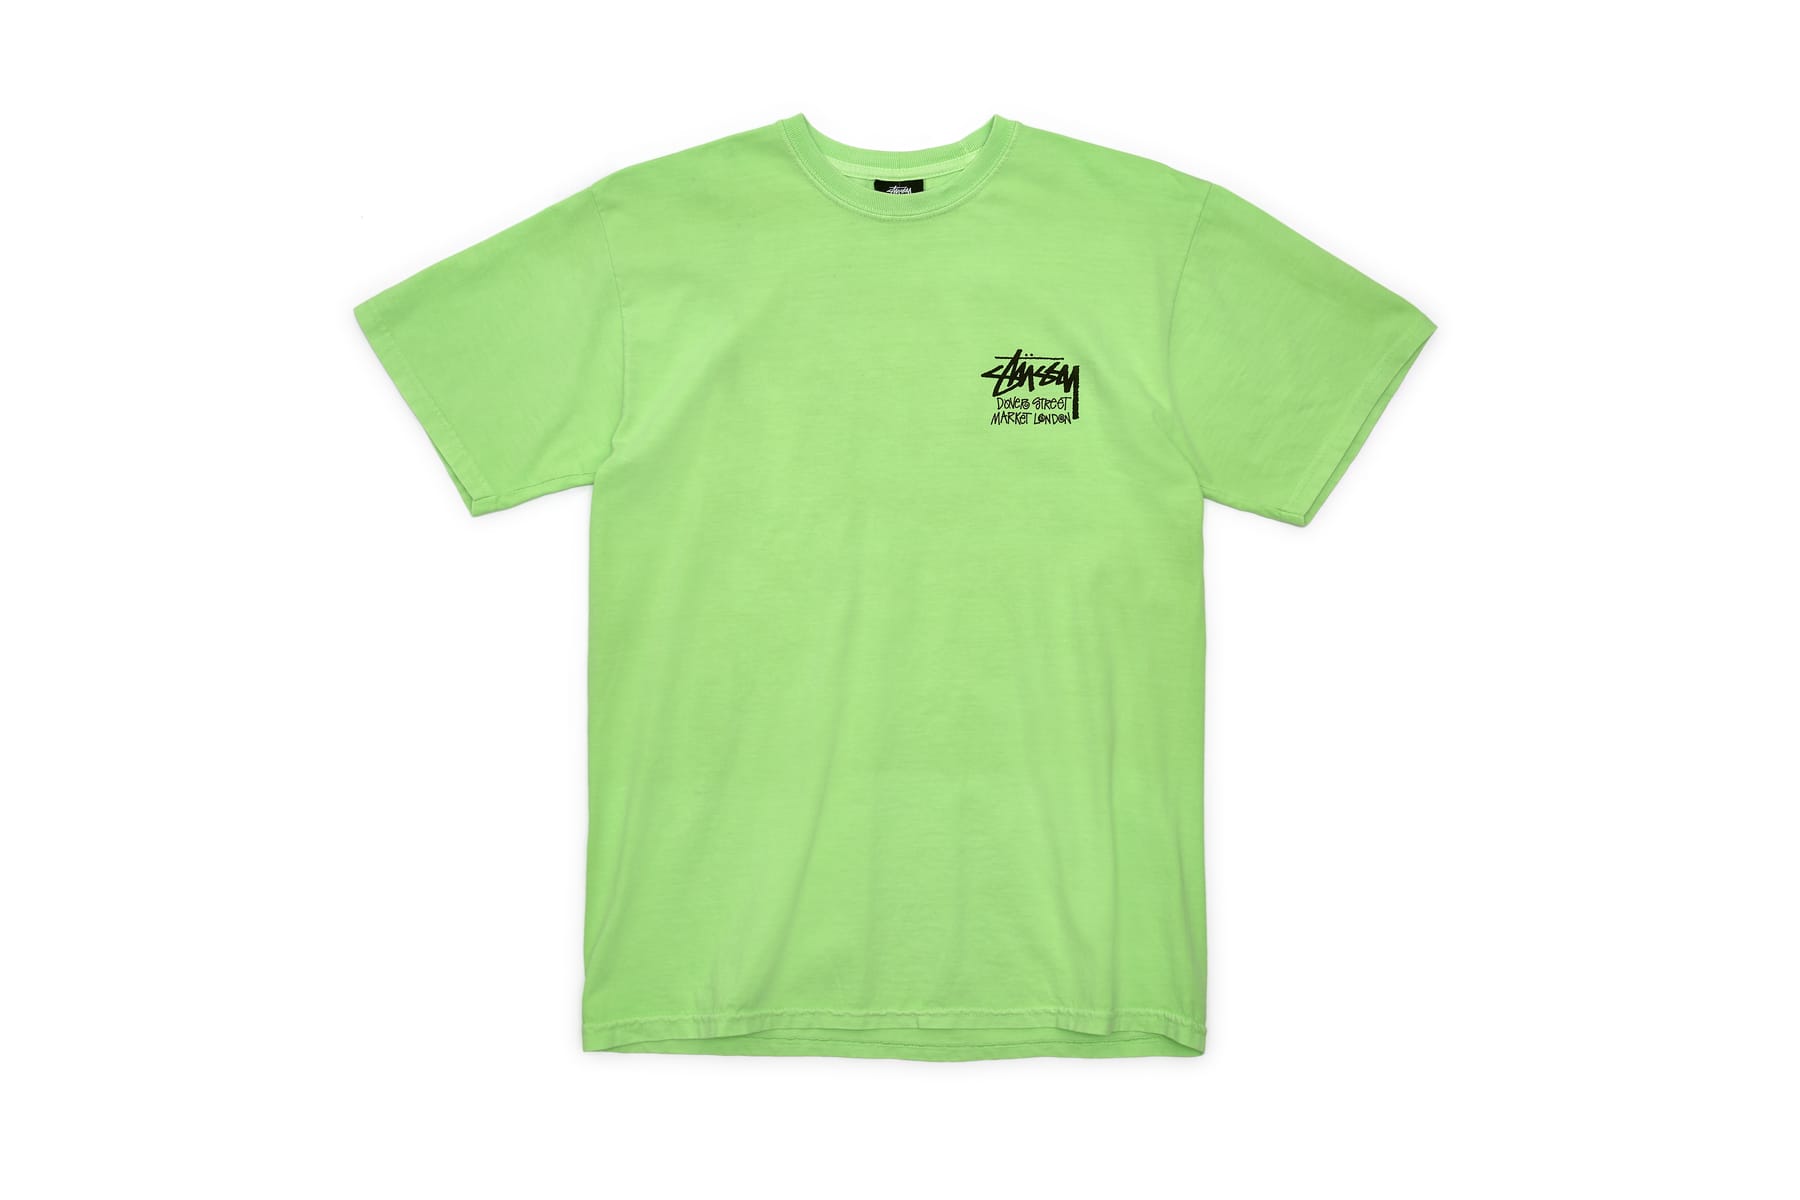 Stüssy & DSM Pigment Dyed Hoodies & T-shirts | HYPEBEAST